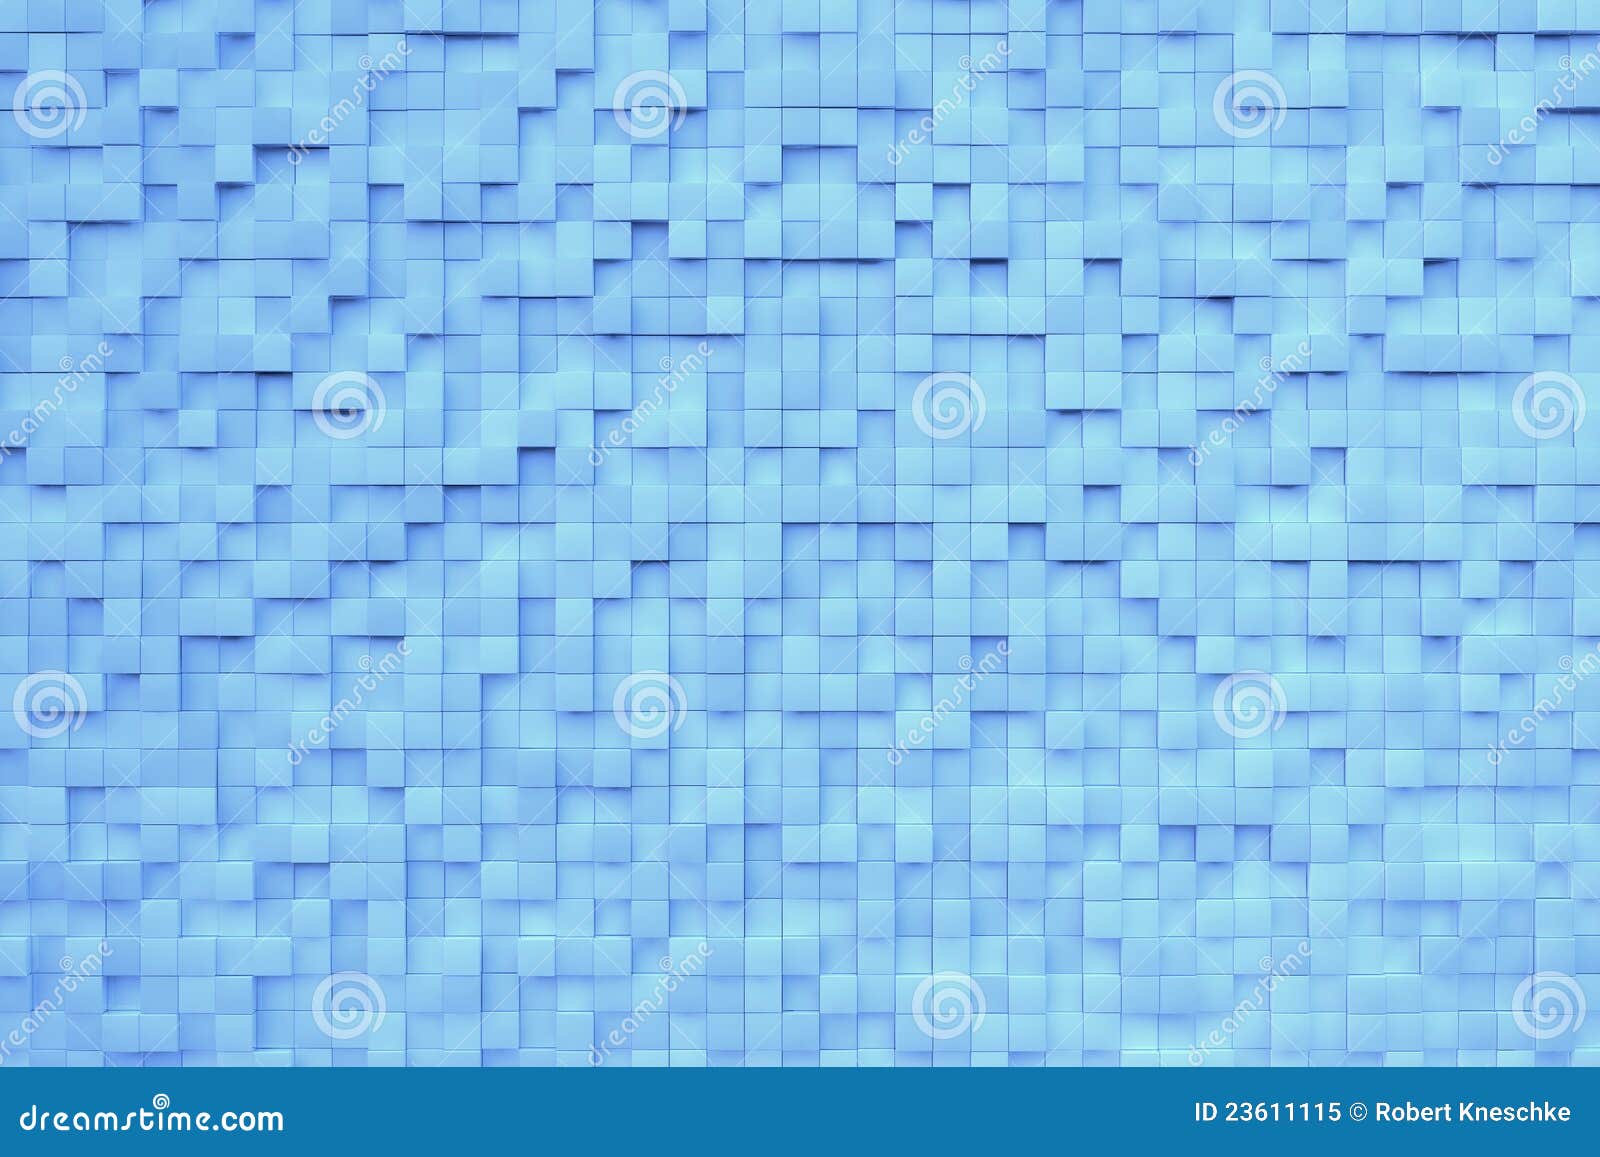 Blue 3D background stock illustration. Illustration of cubus - 23611115